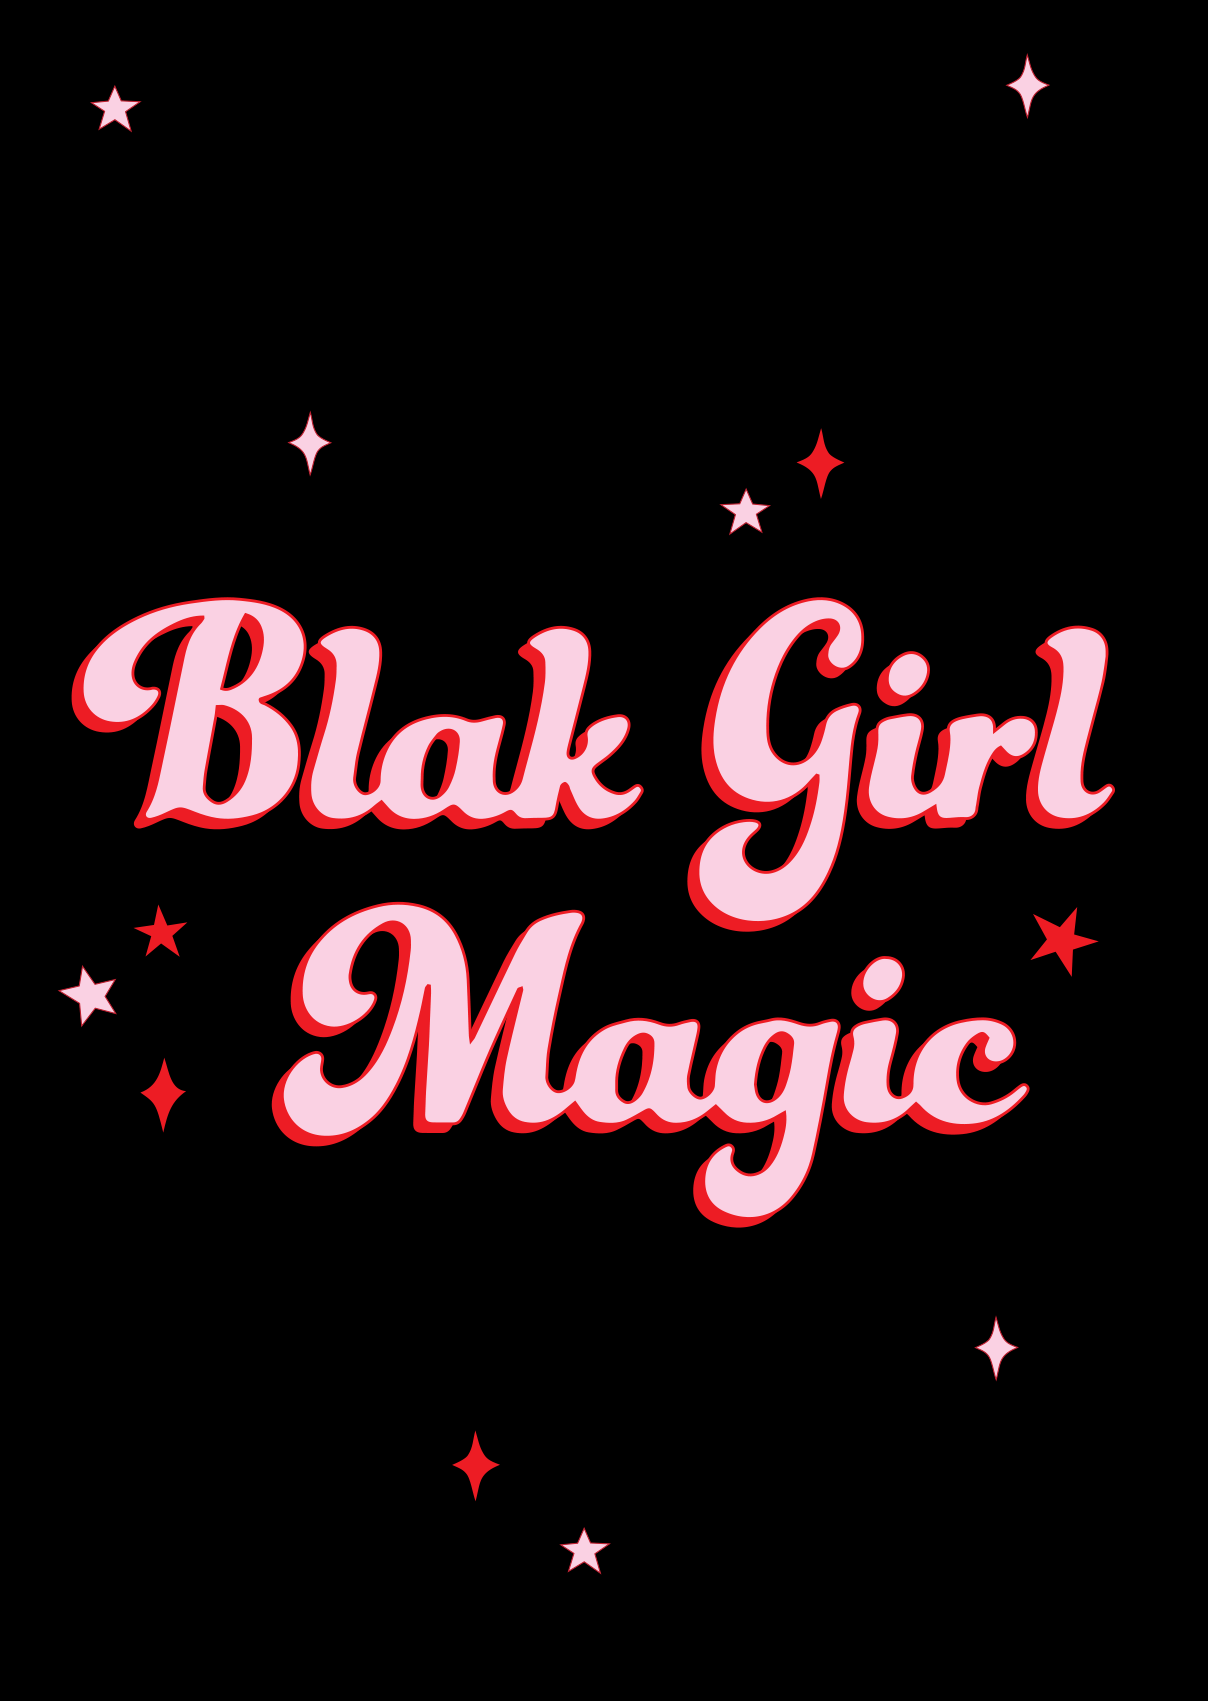 Blak Girl Magic poster